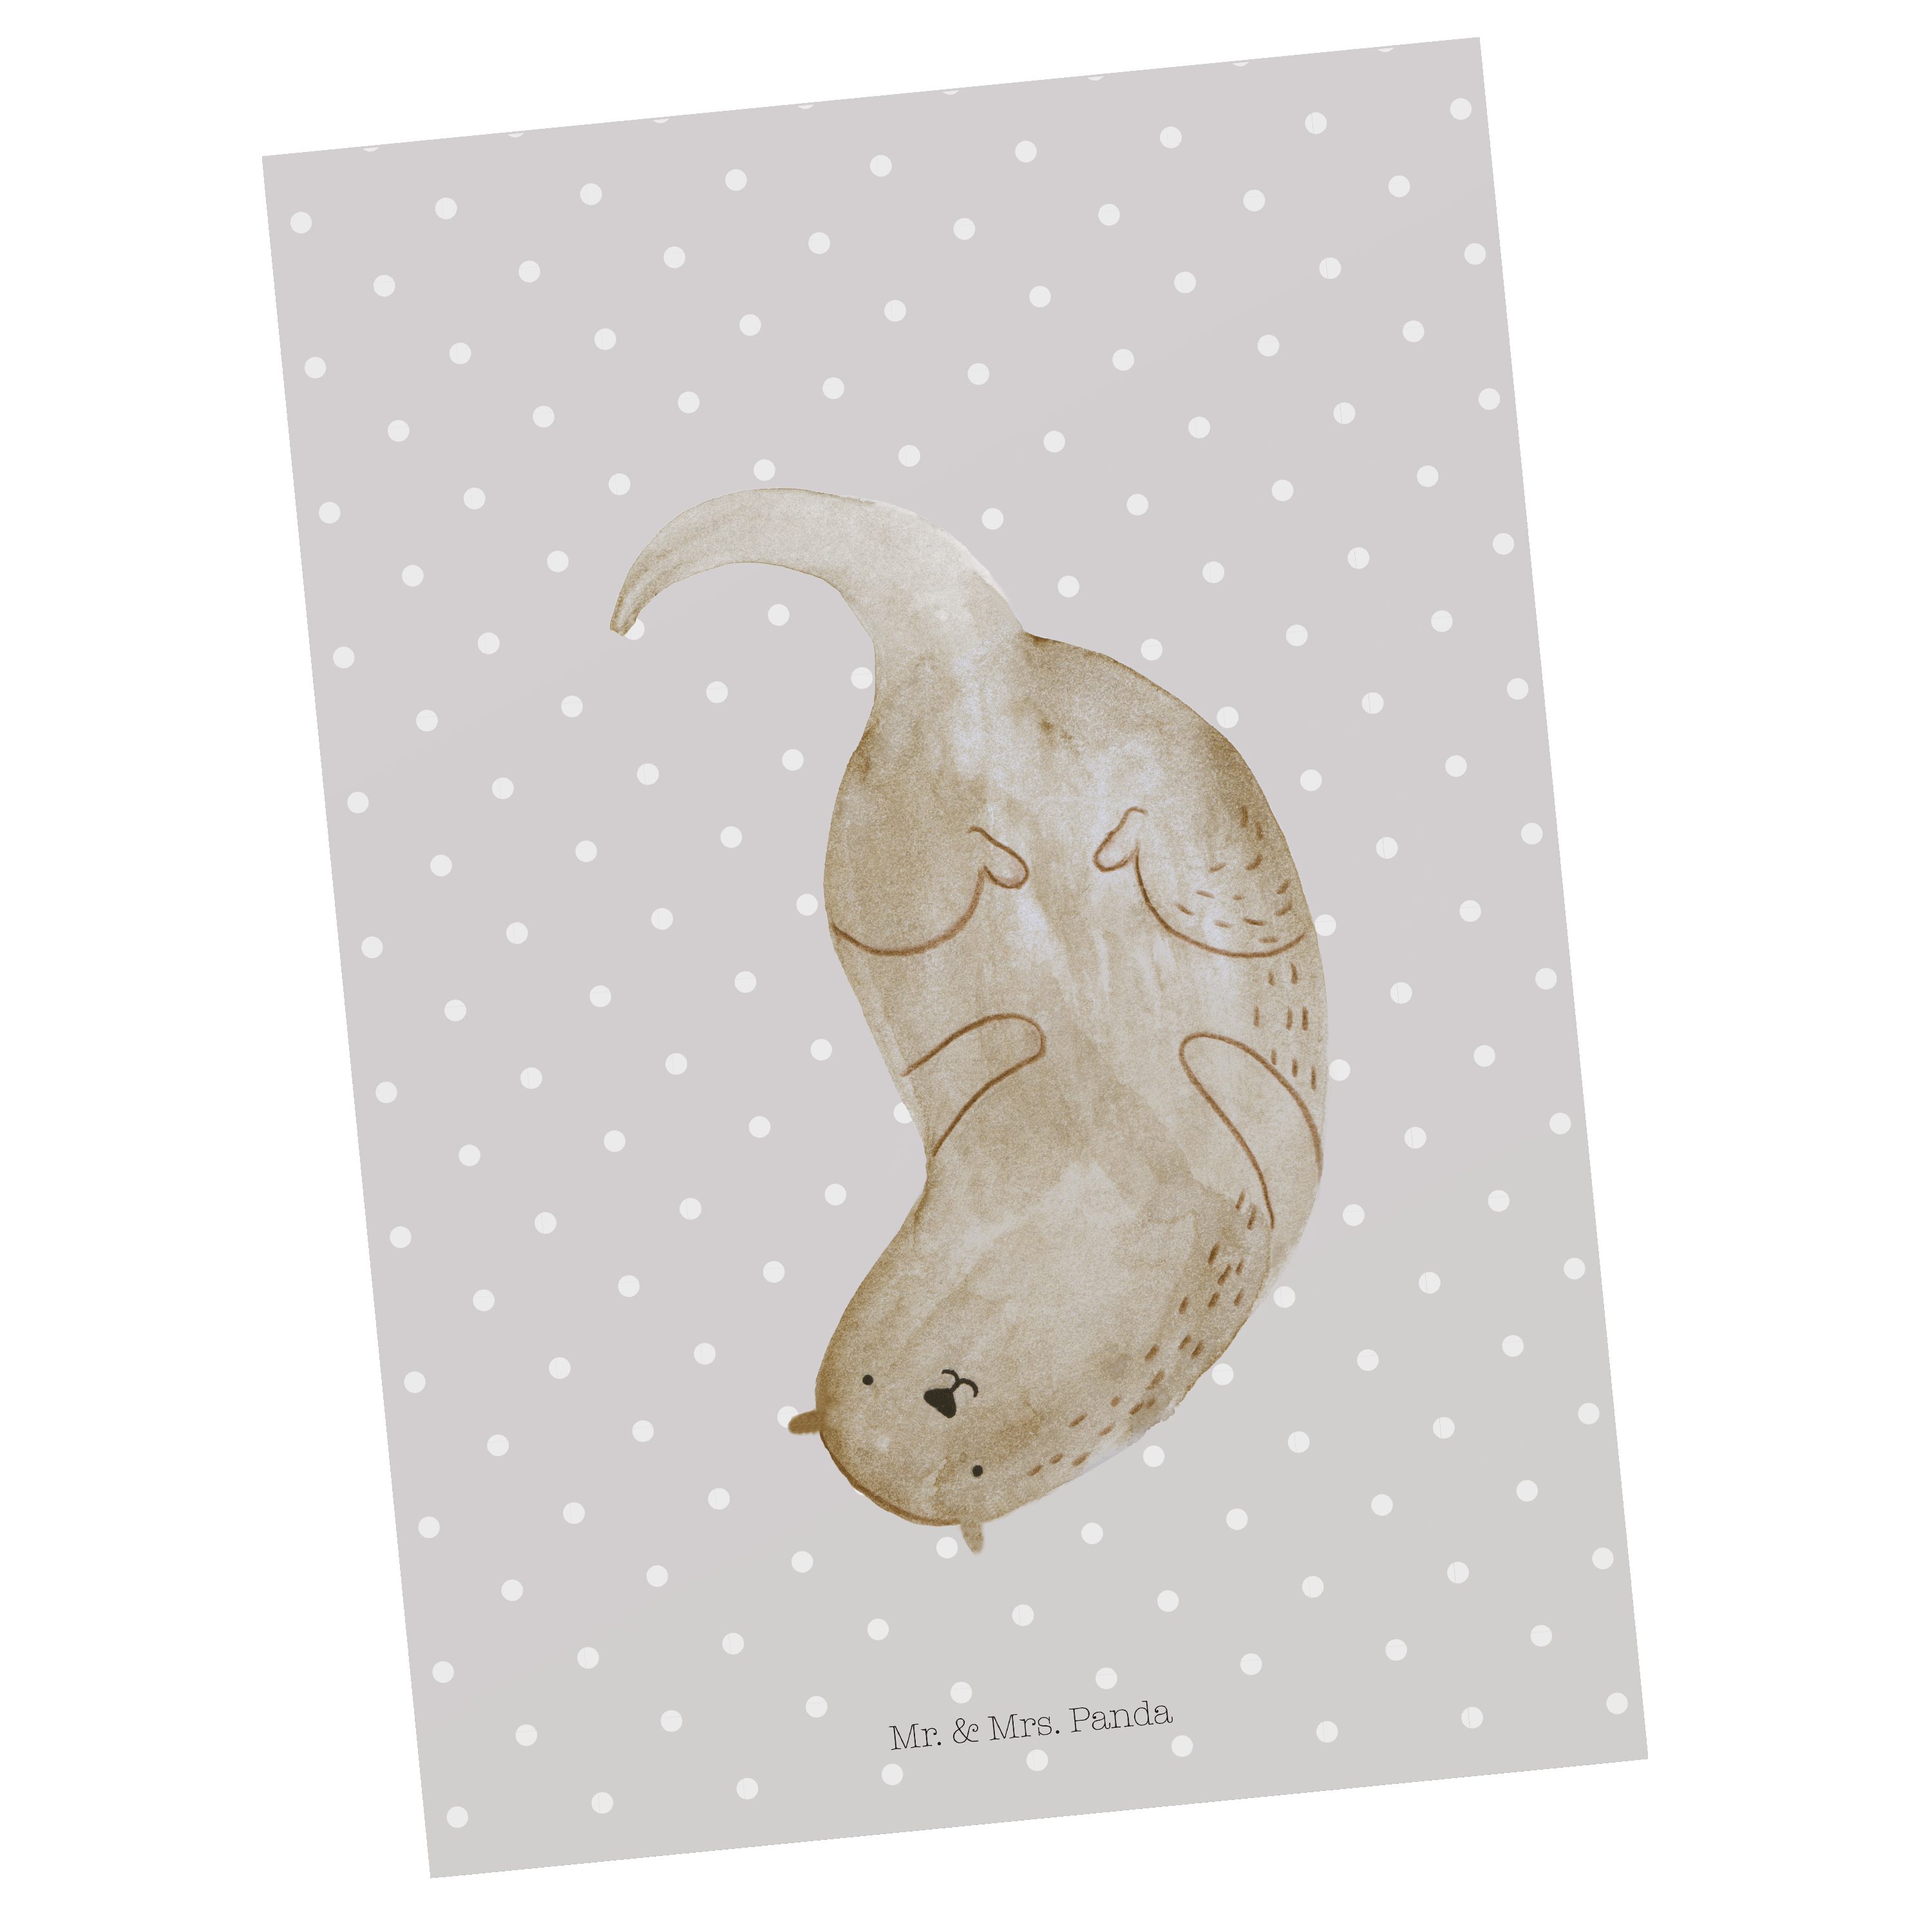 Mr. & Mrs. Panda Postkarte Otter kopfüber - Grau Pastell - Geschenk, süß, Otter Seeotter See Ott